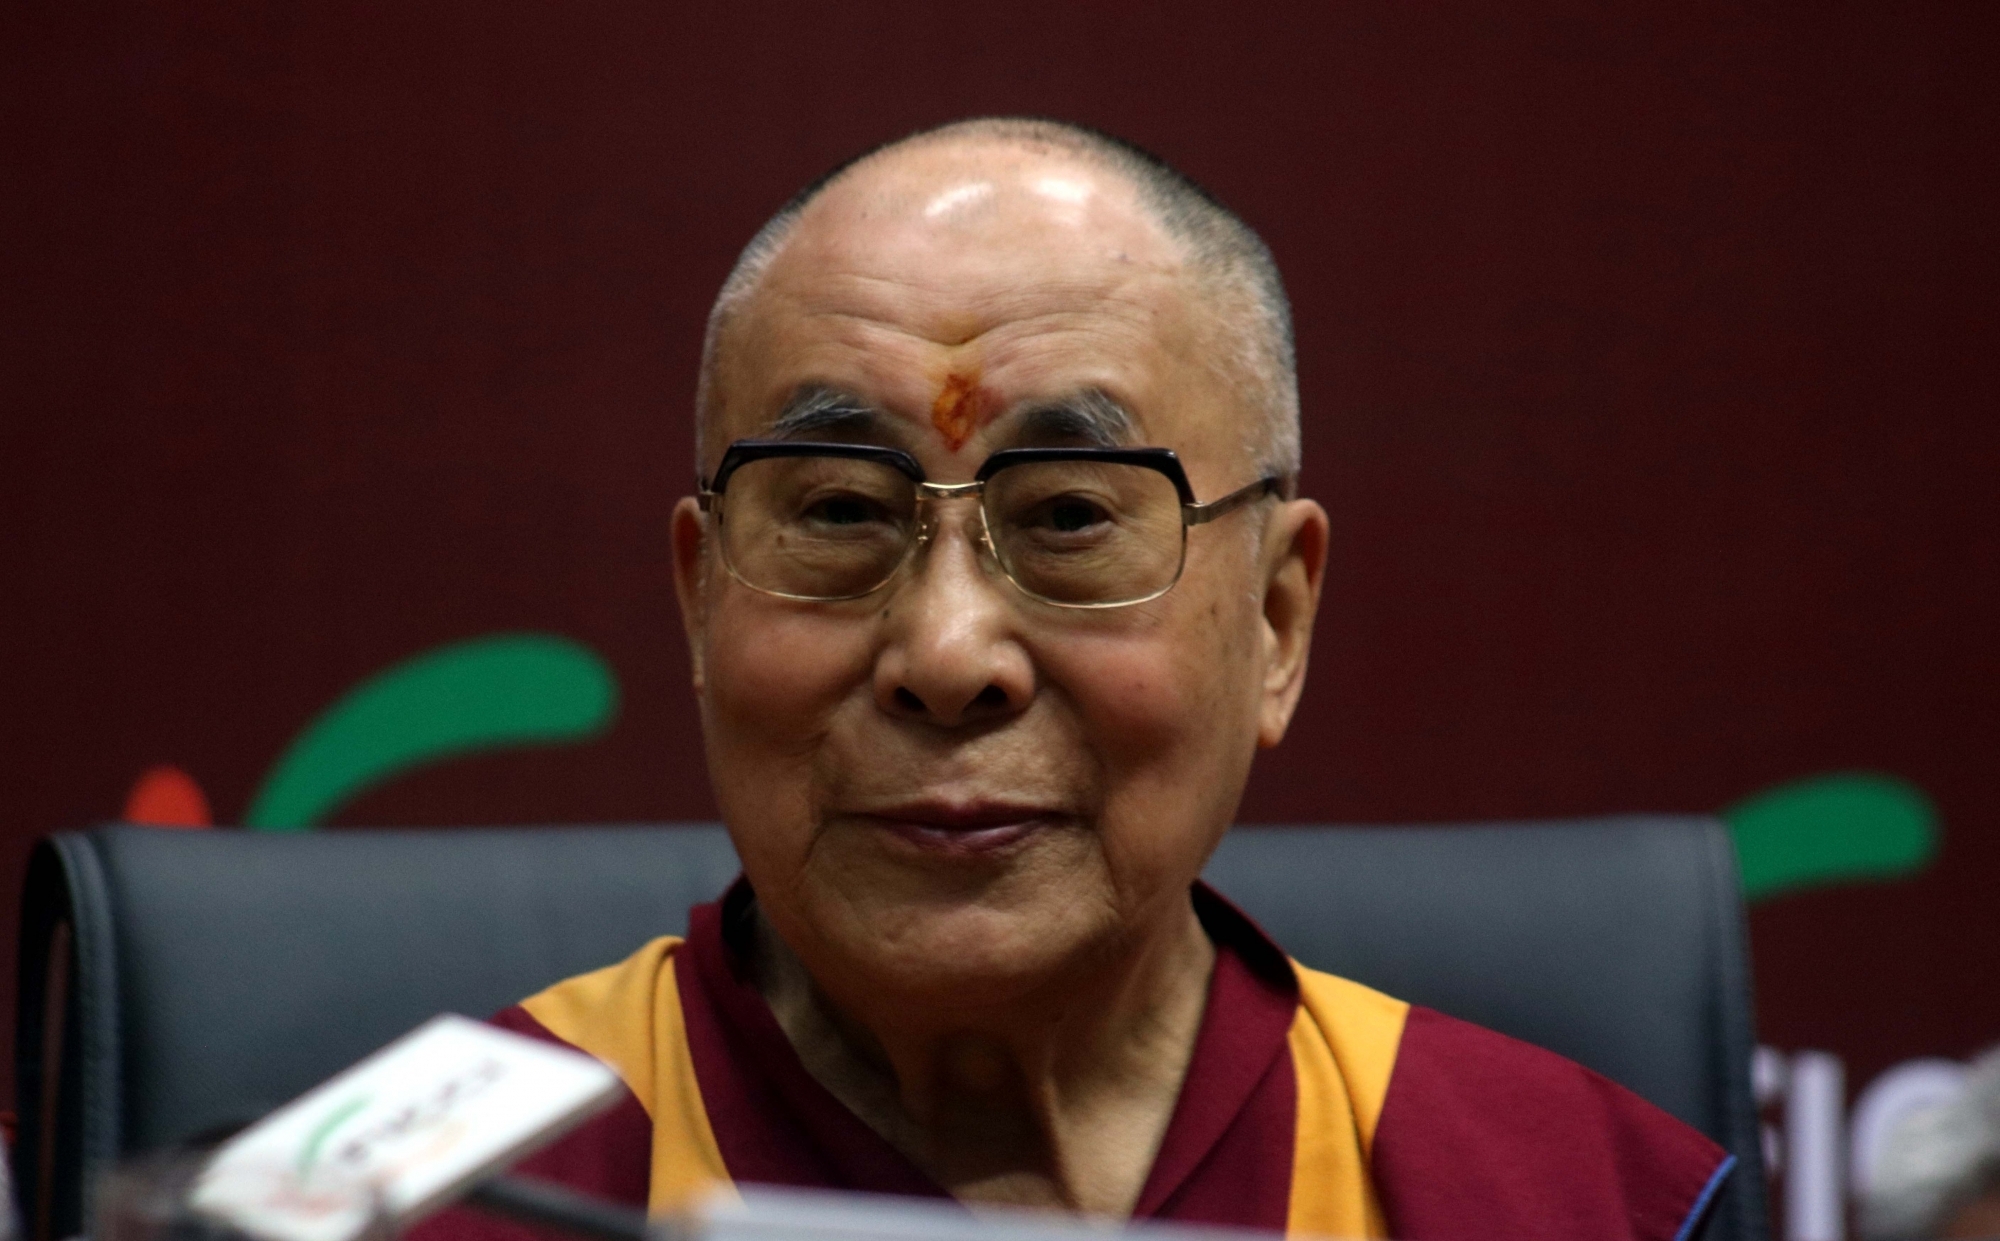 India says its position on Dalai Lama unchanged